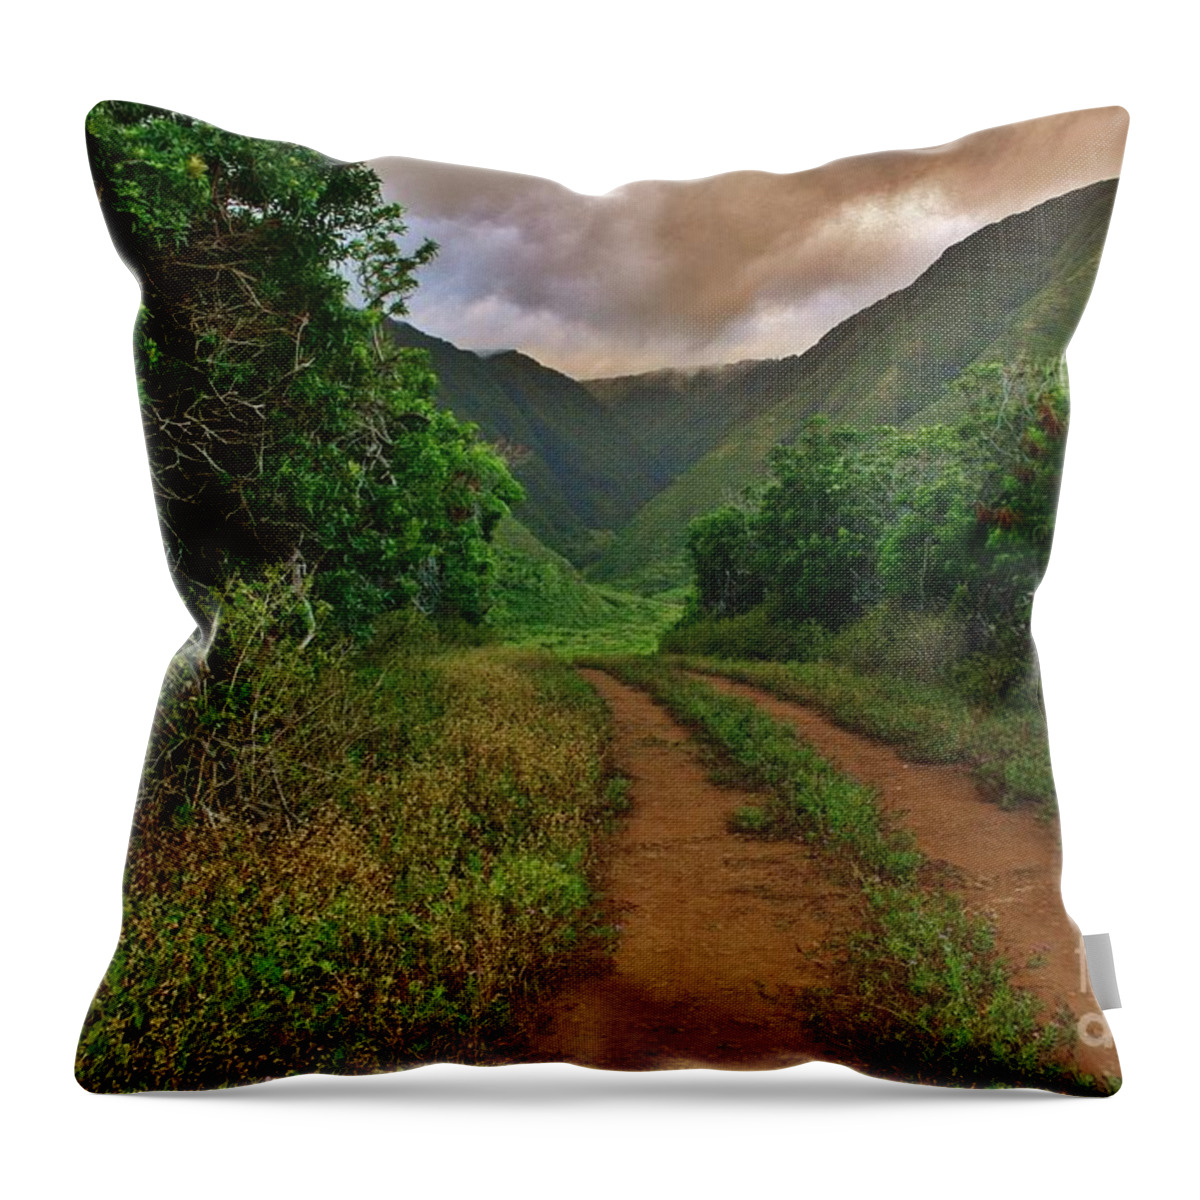 Kalaupapa Throw Pillow featuring the photograph Country Road Kalaupapa, Molokai by Craig Wood